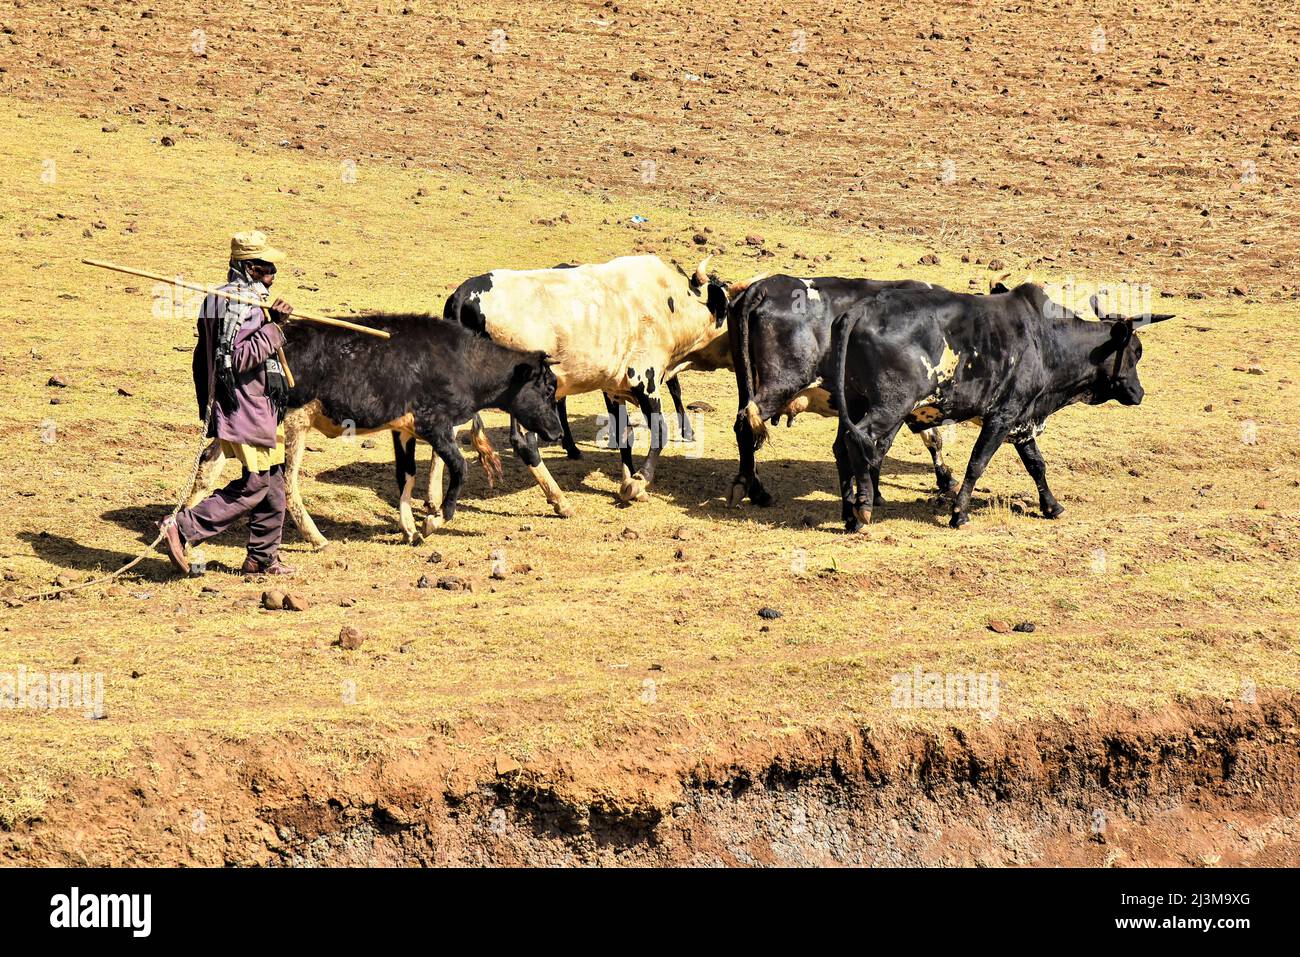 Cattle herder moving cattle across arid farmland; Ethiopia Stock Photo